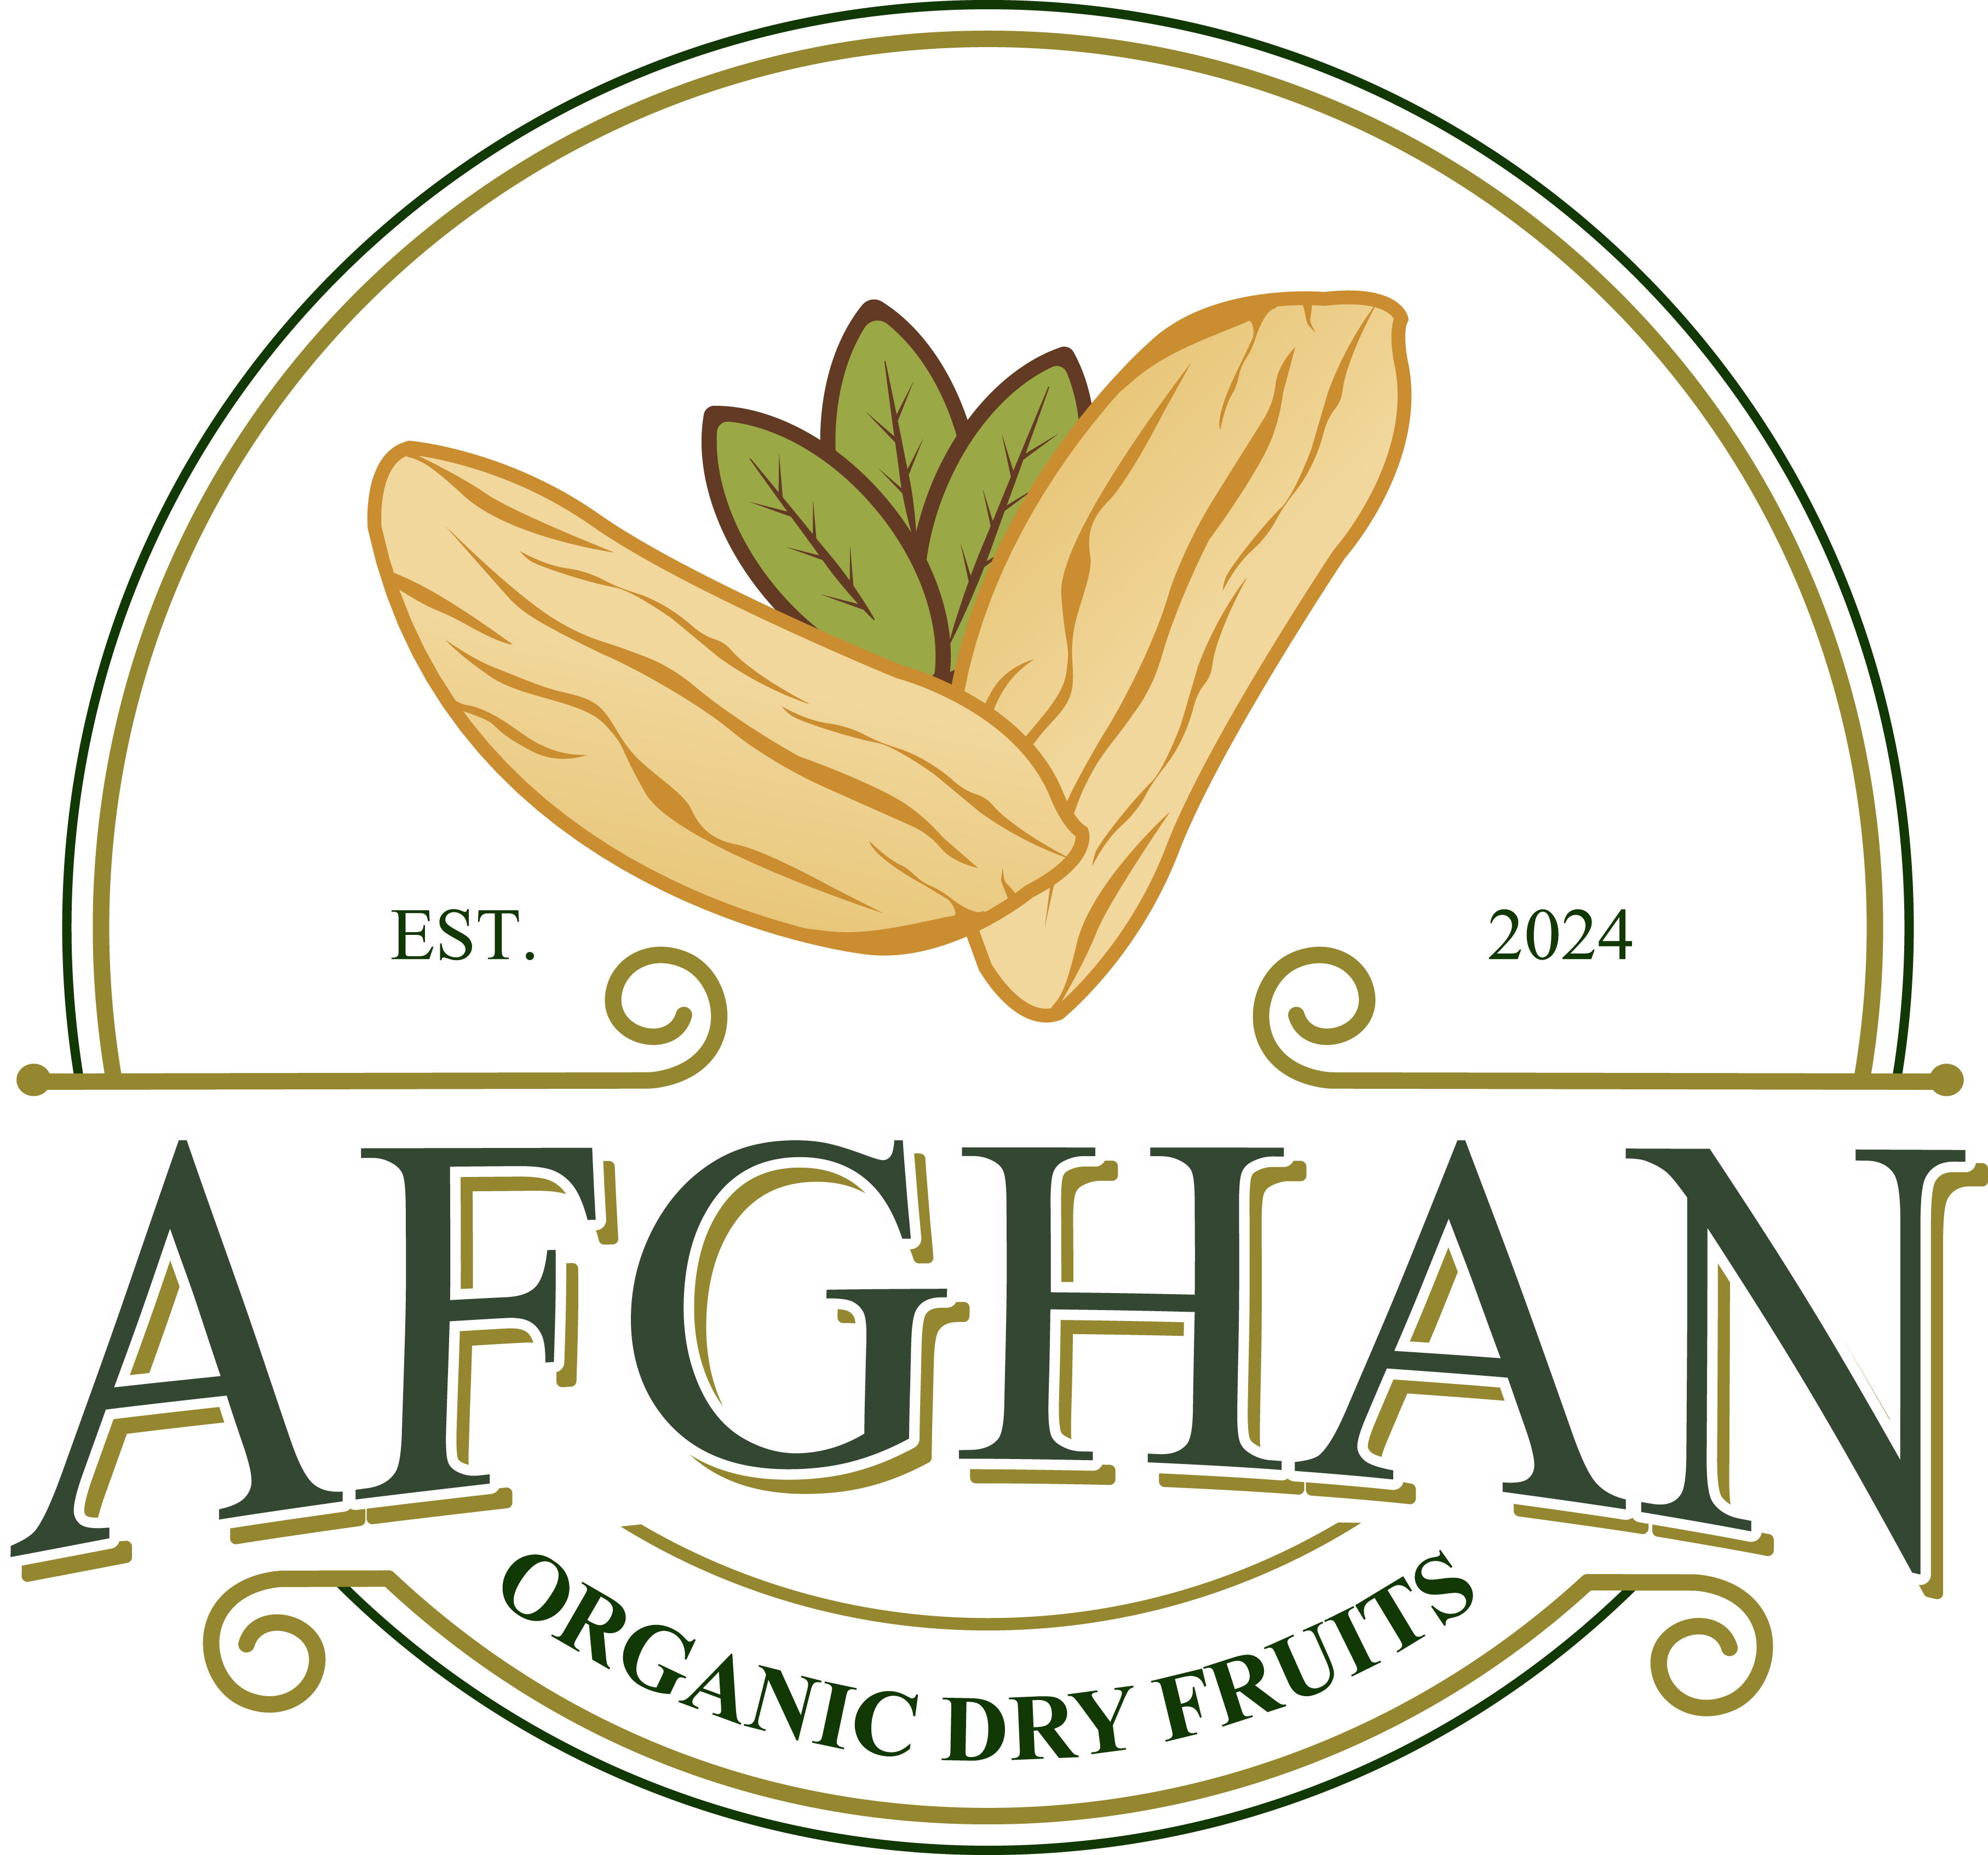 Afghan Organic Dry Fruits